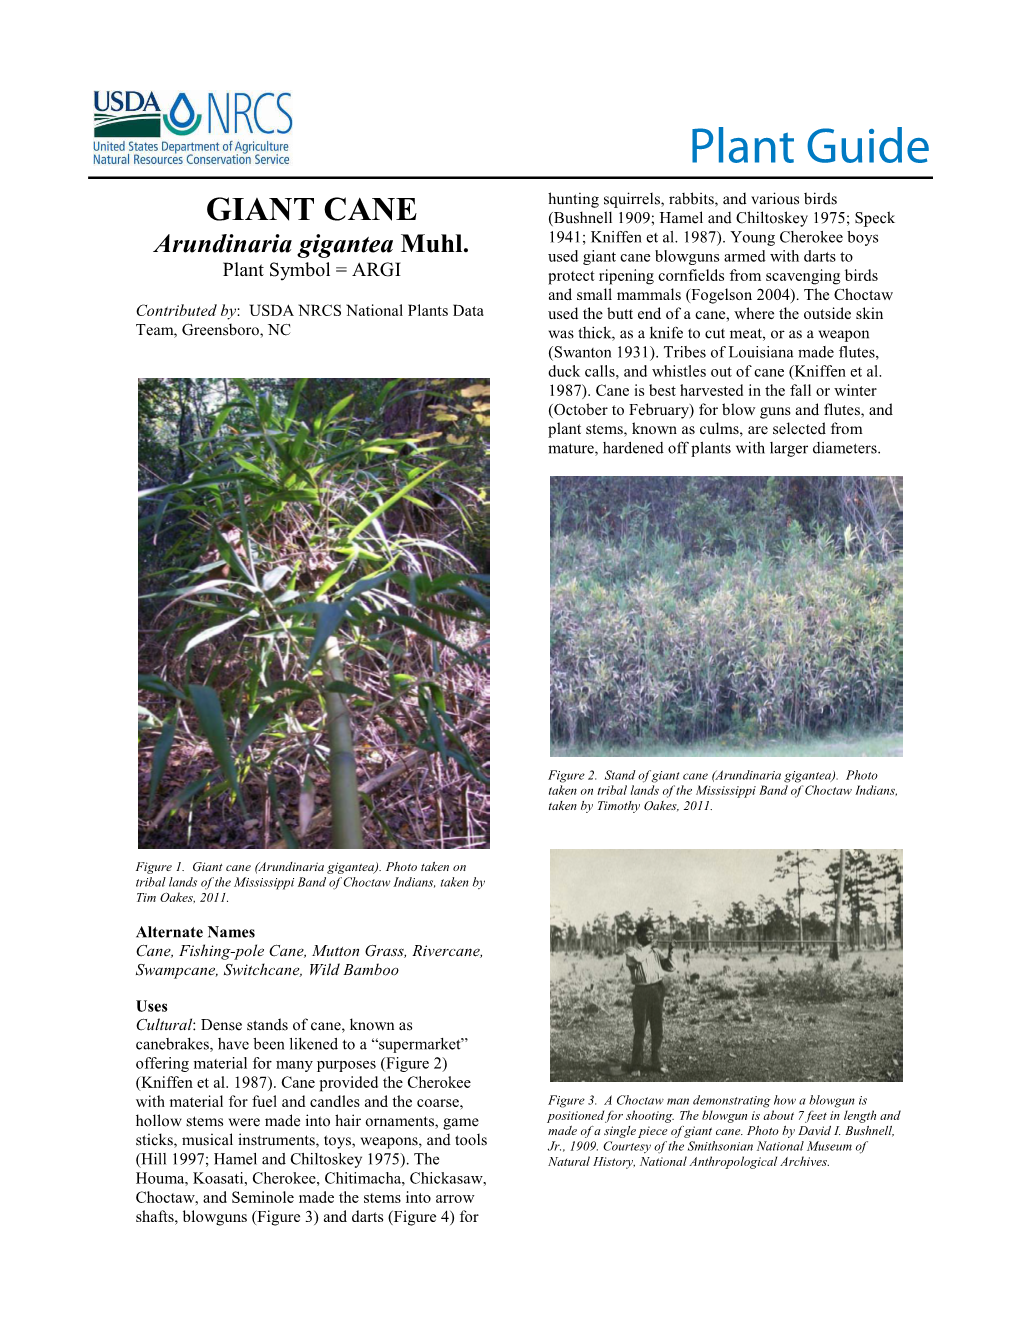 Giant Cane (Arundinaria Gigantea) Plant Guide